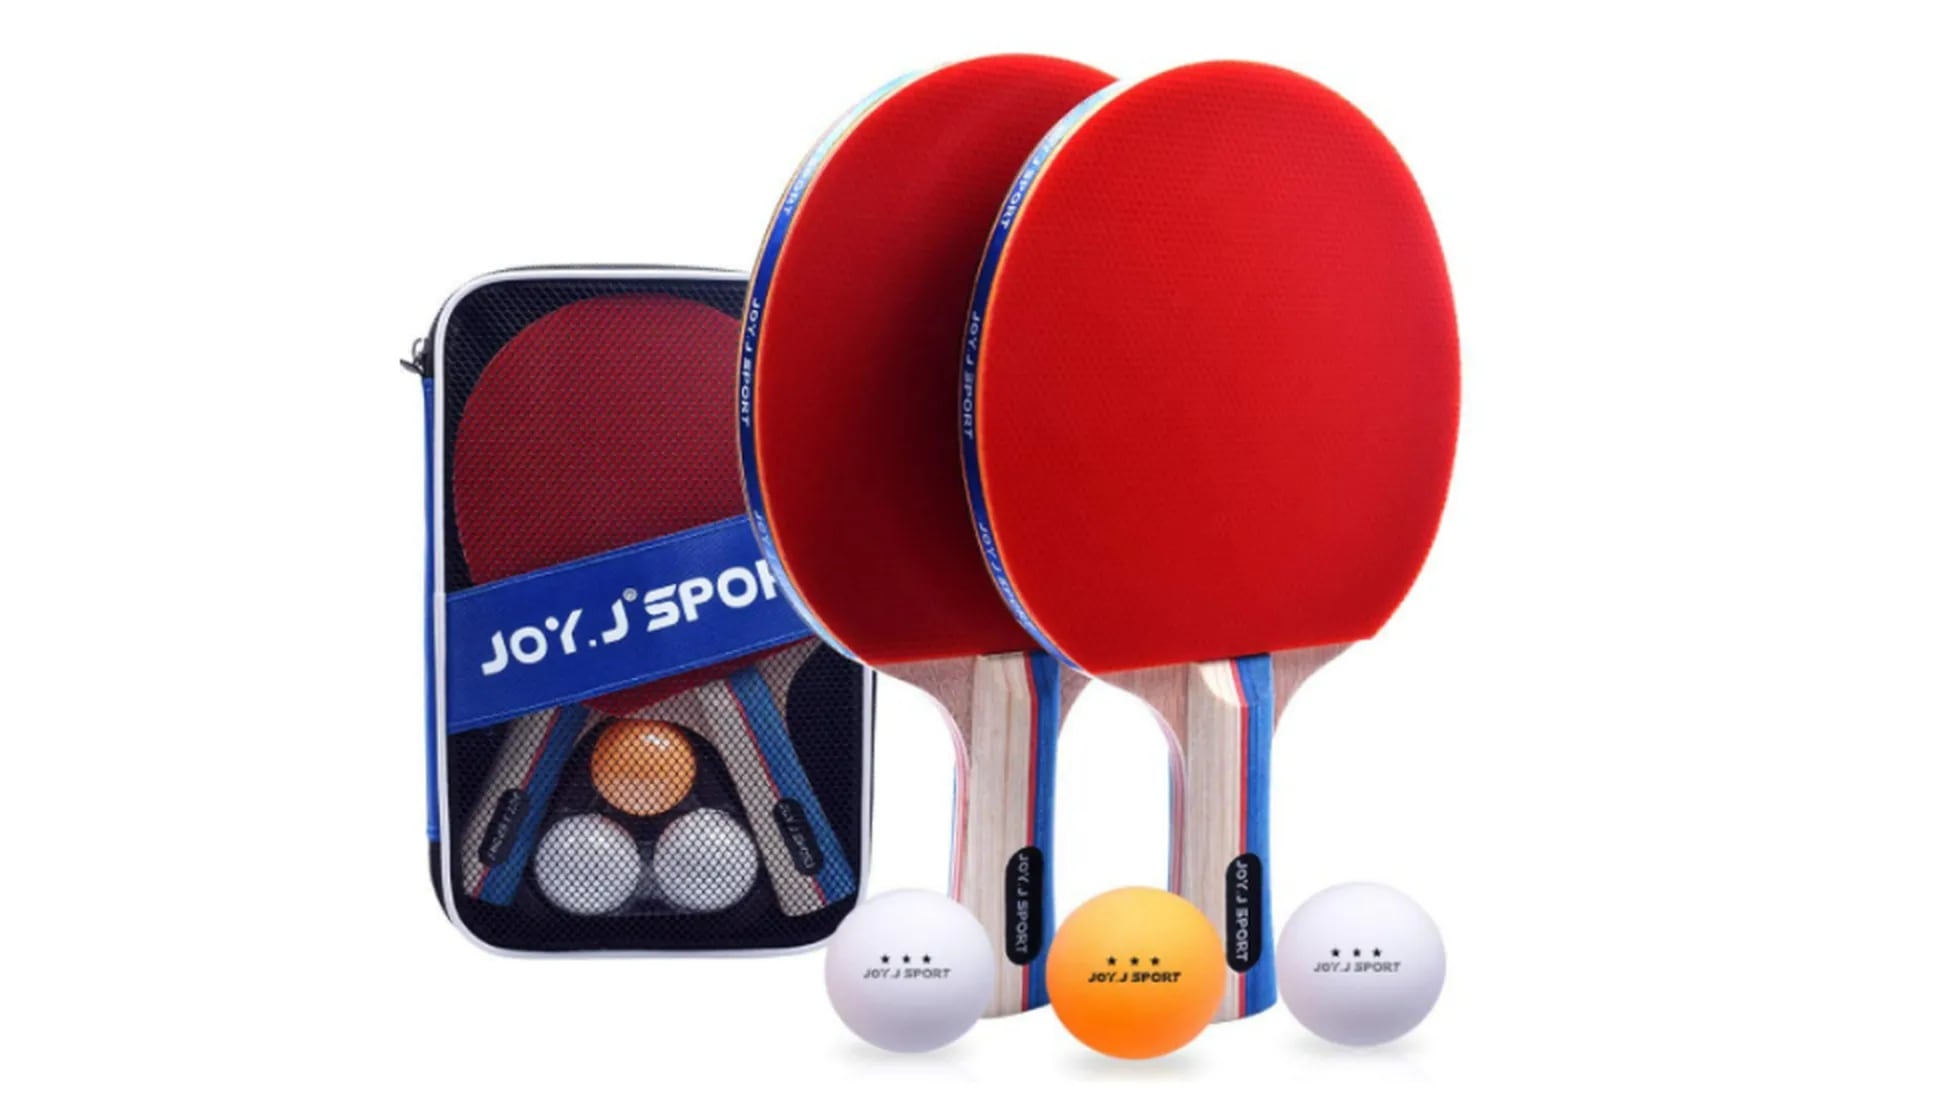 Palas de Ping pong · Deportes · El Corte Inglés (18)